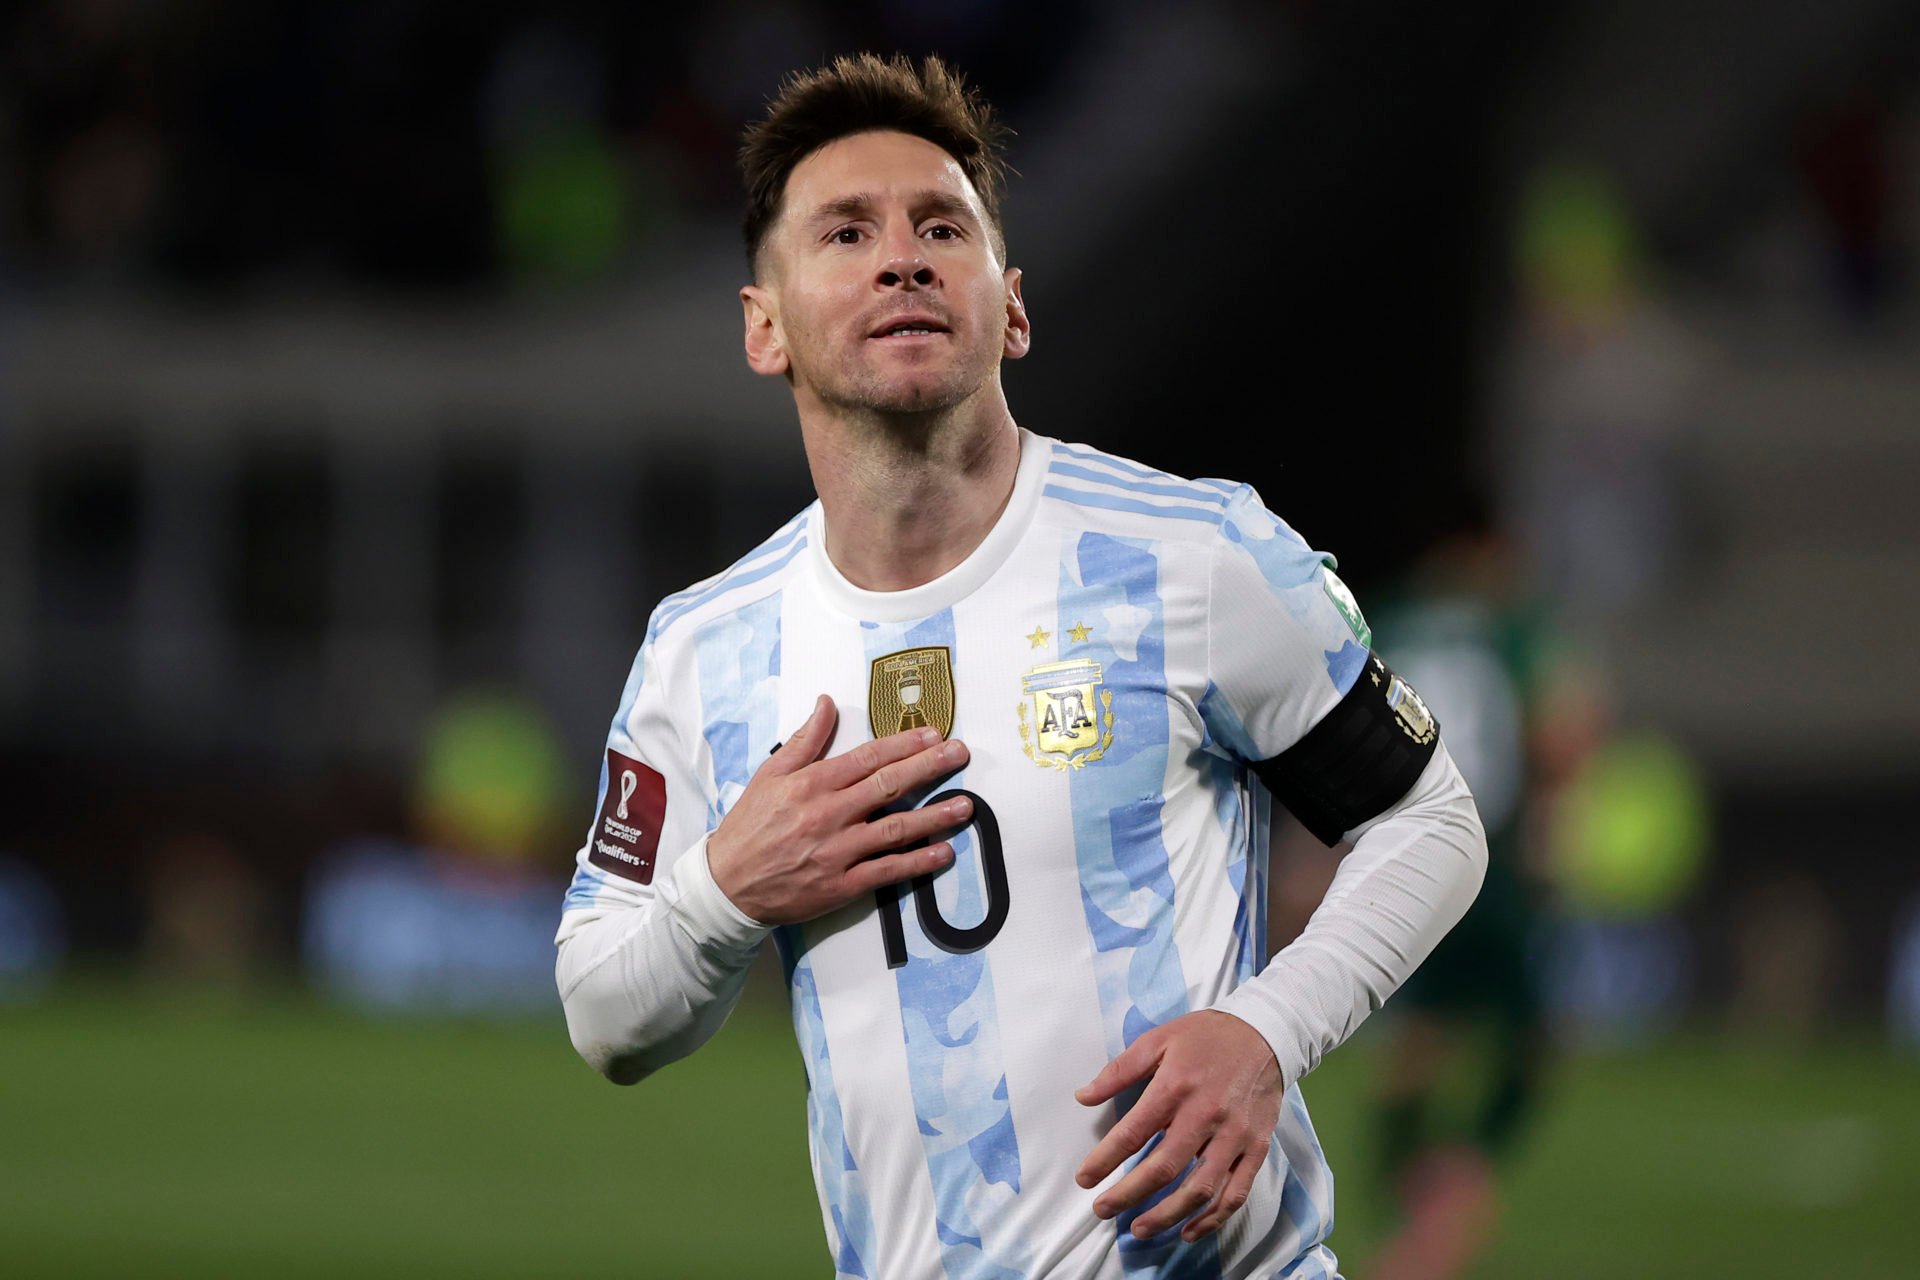 Debunked: Lionel Messi is not dead, car accident rumors are untrue